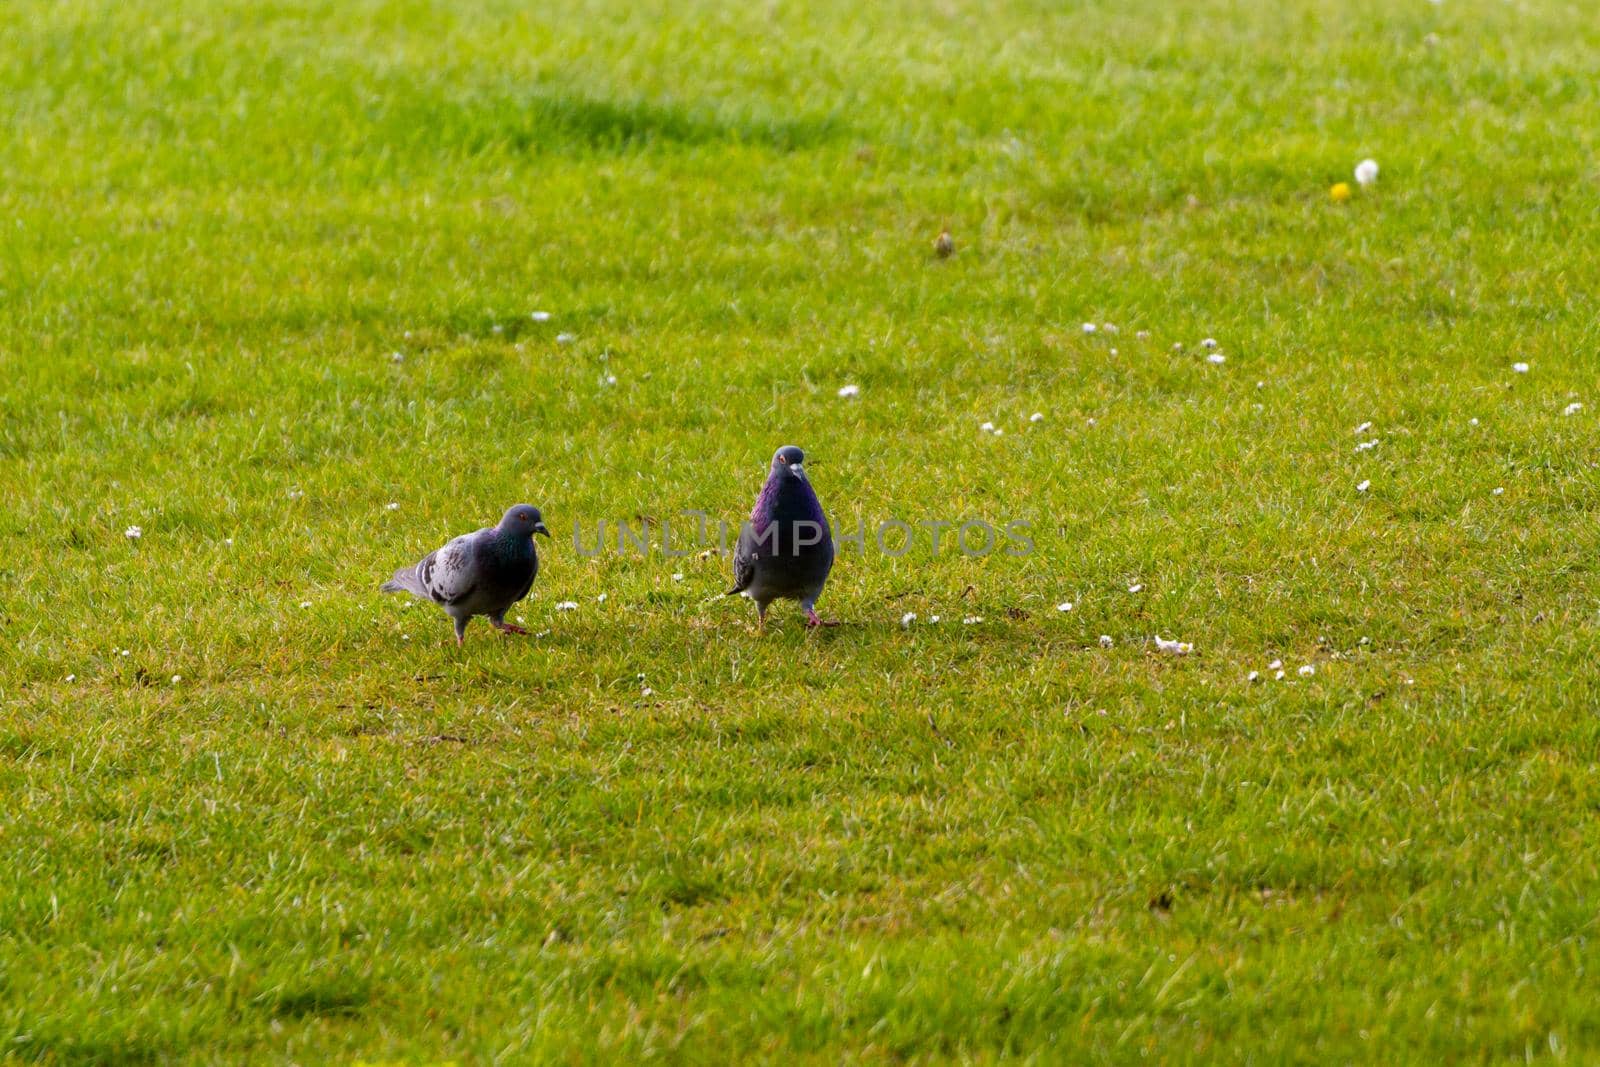 Two Pigeons Walking In a Lawn by AlbertoPascual